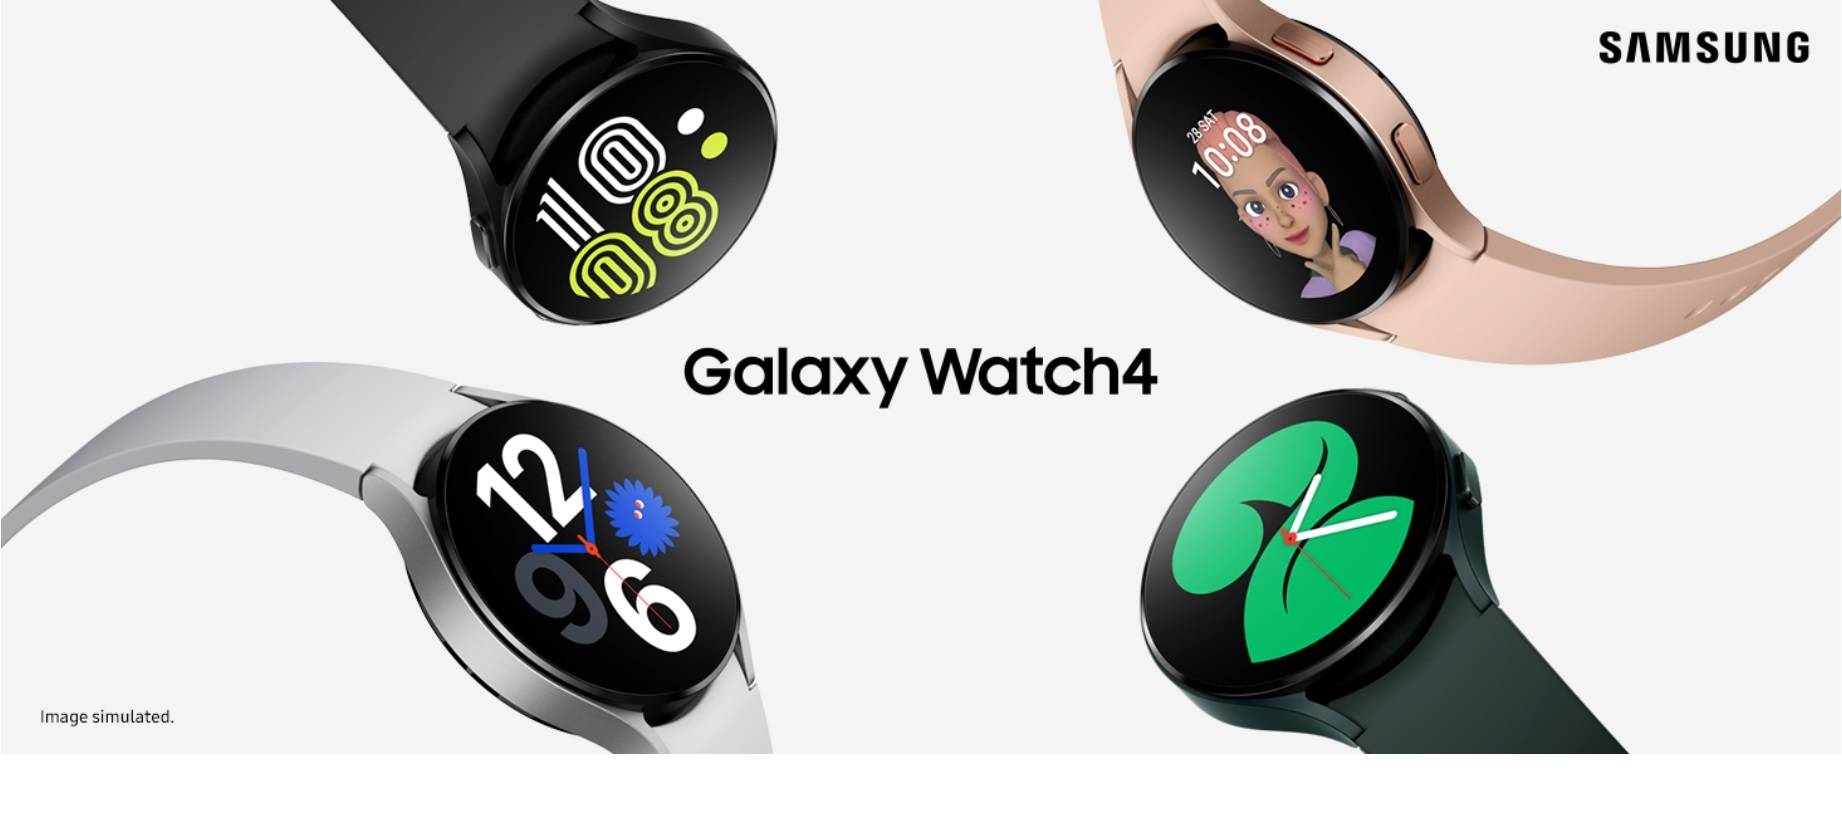 Samsung galaxy watch 4 против galaxy watch active 2: в чем различия?